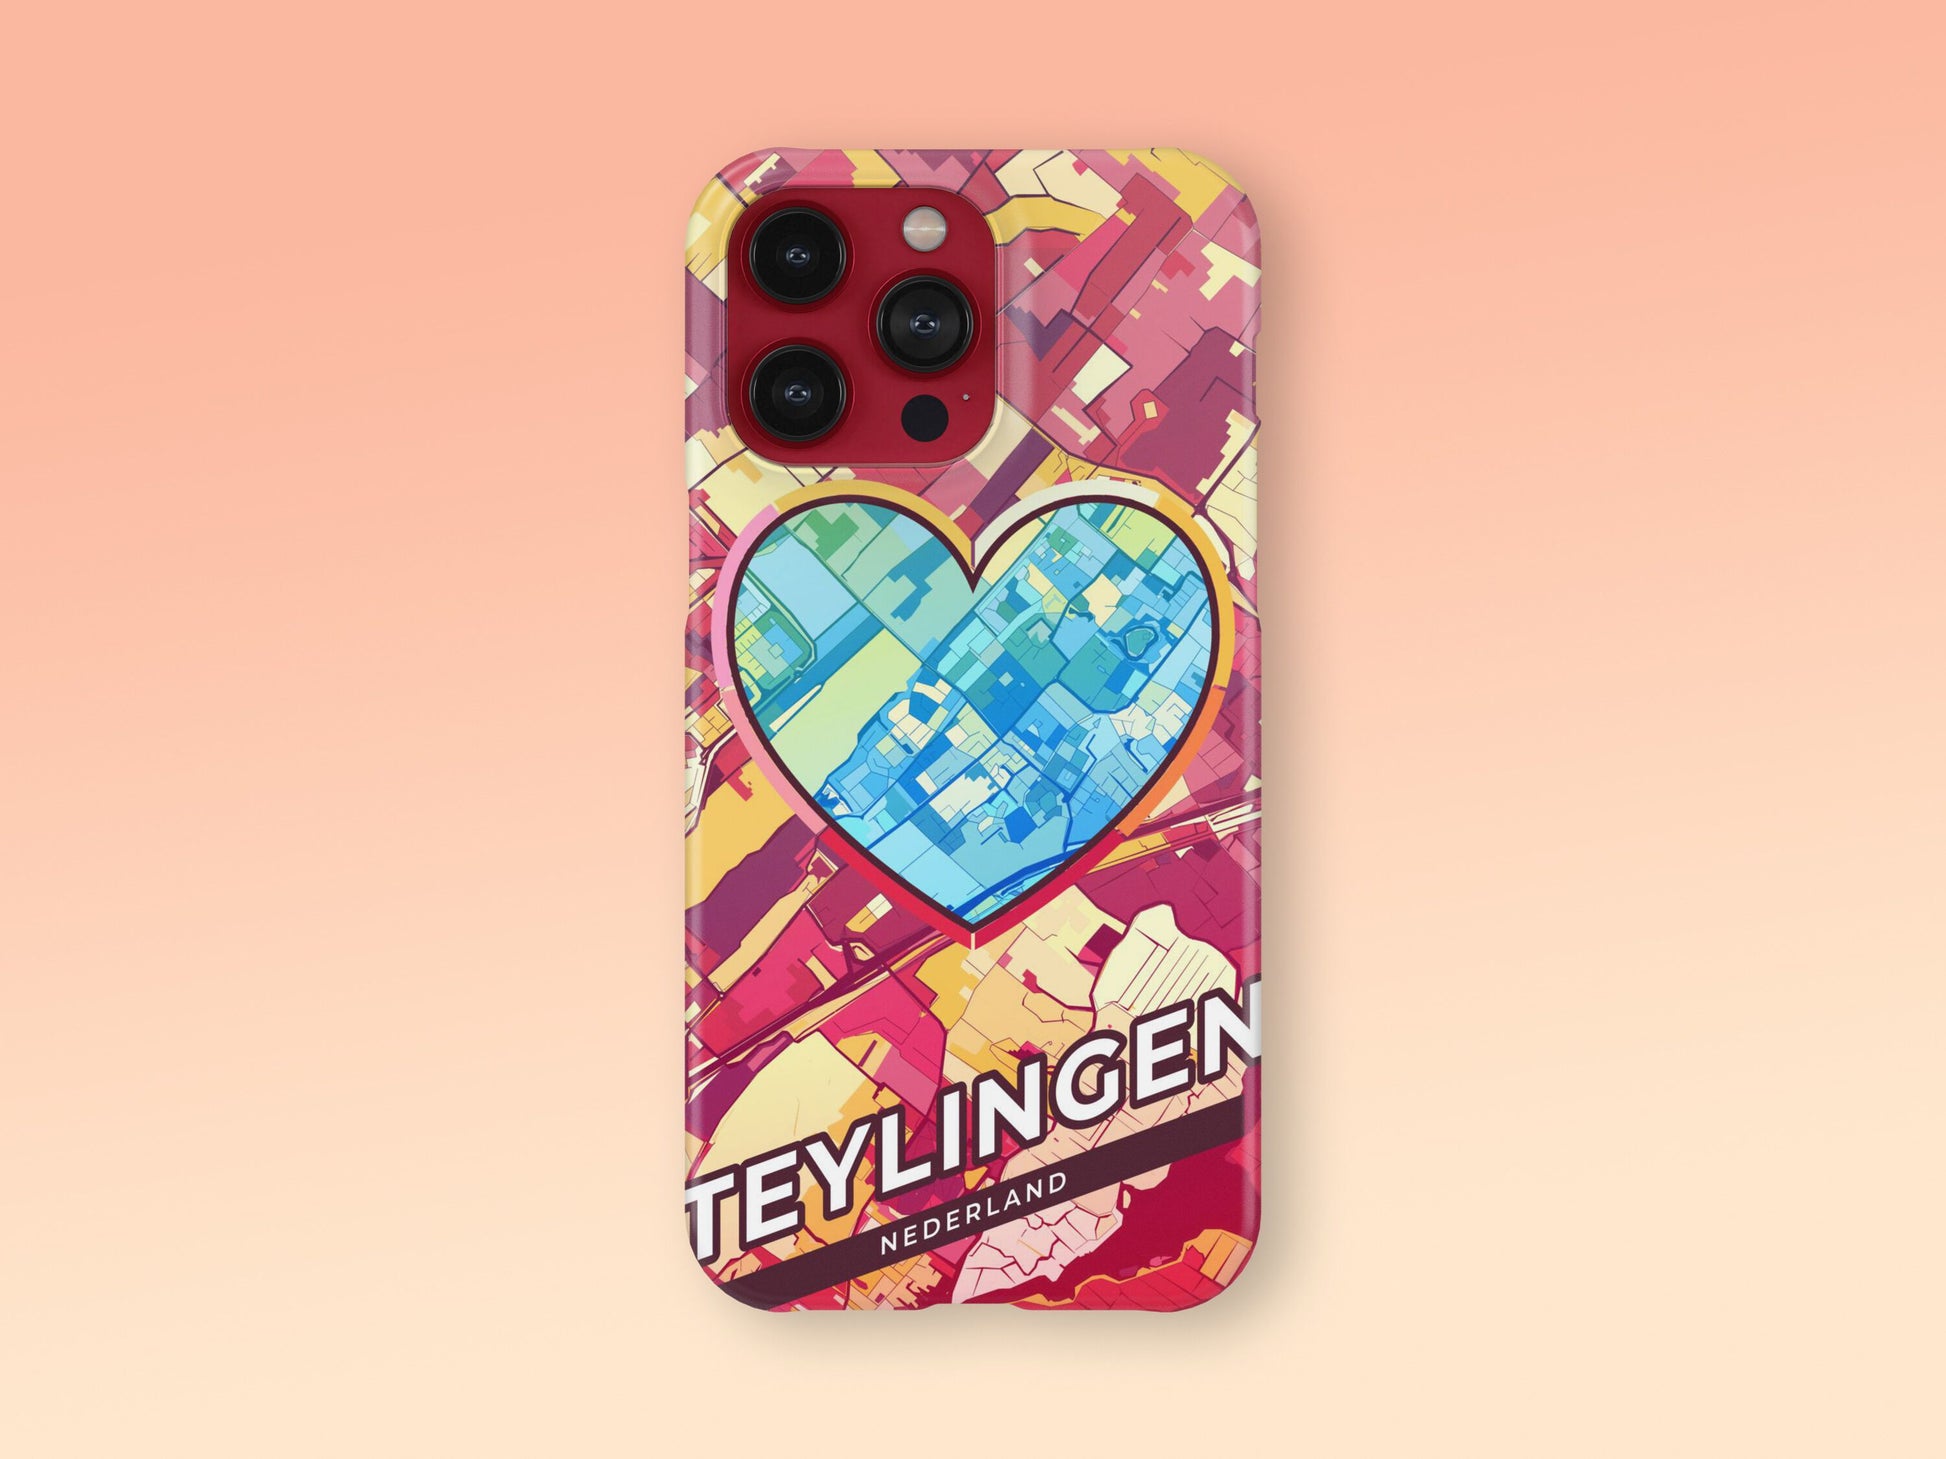 Teylingen Netherlands slim phone case with colorful icon 2